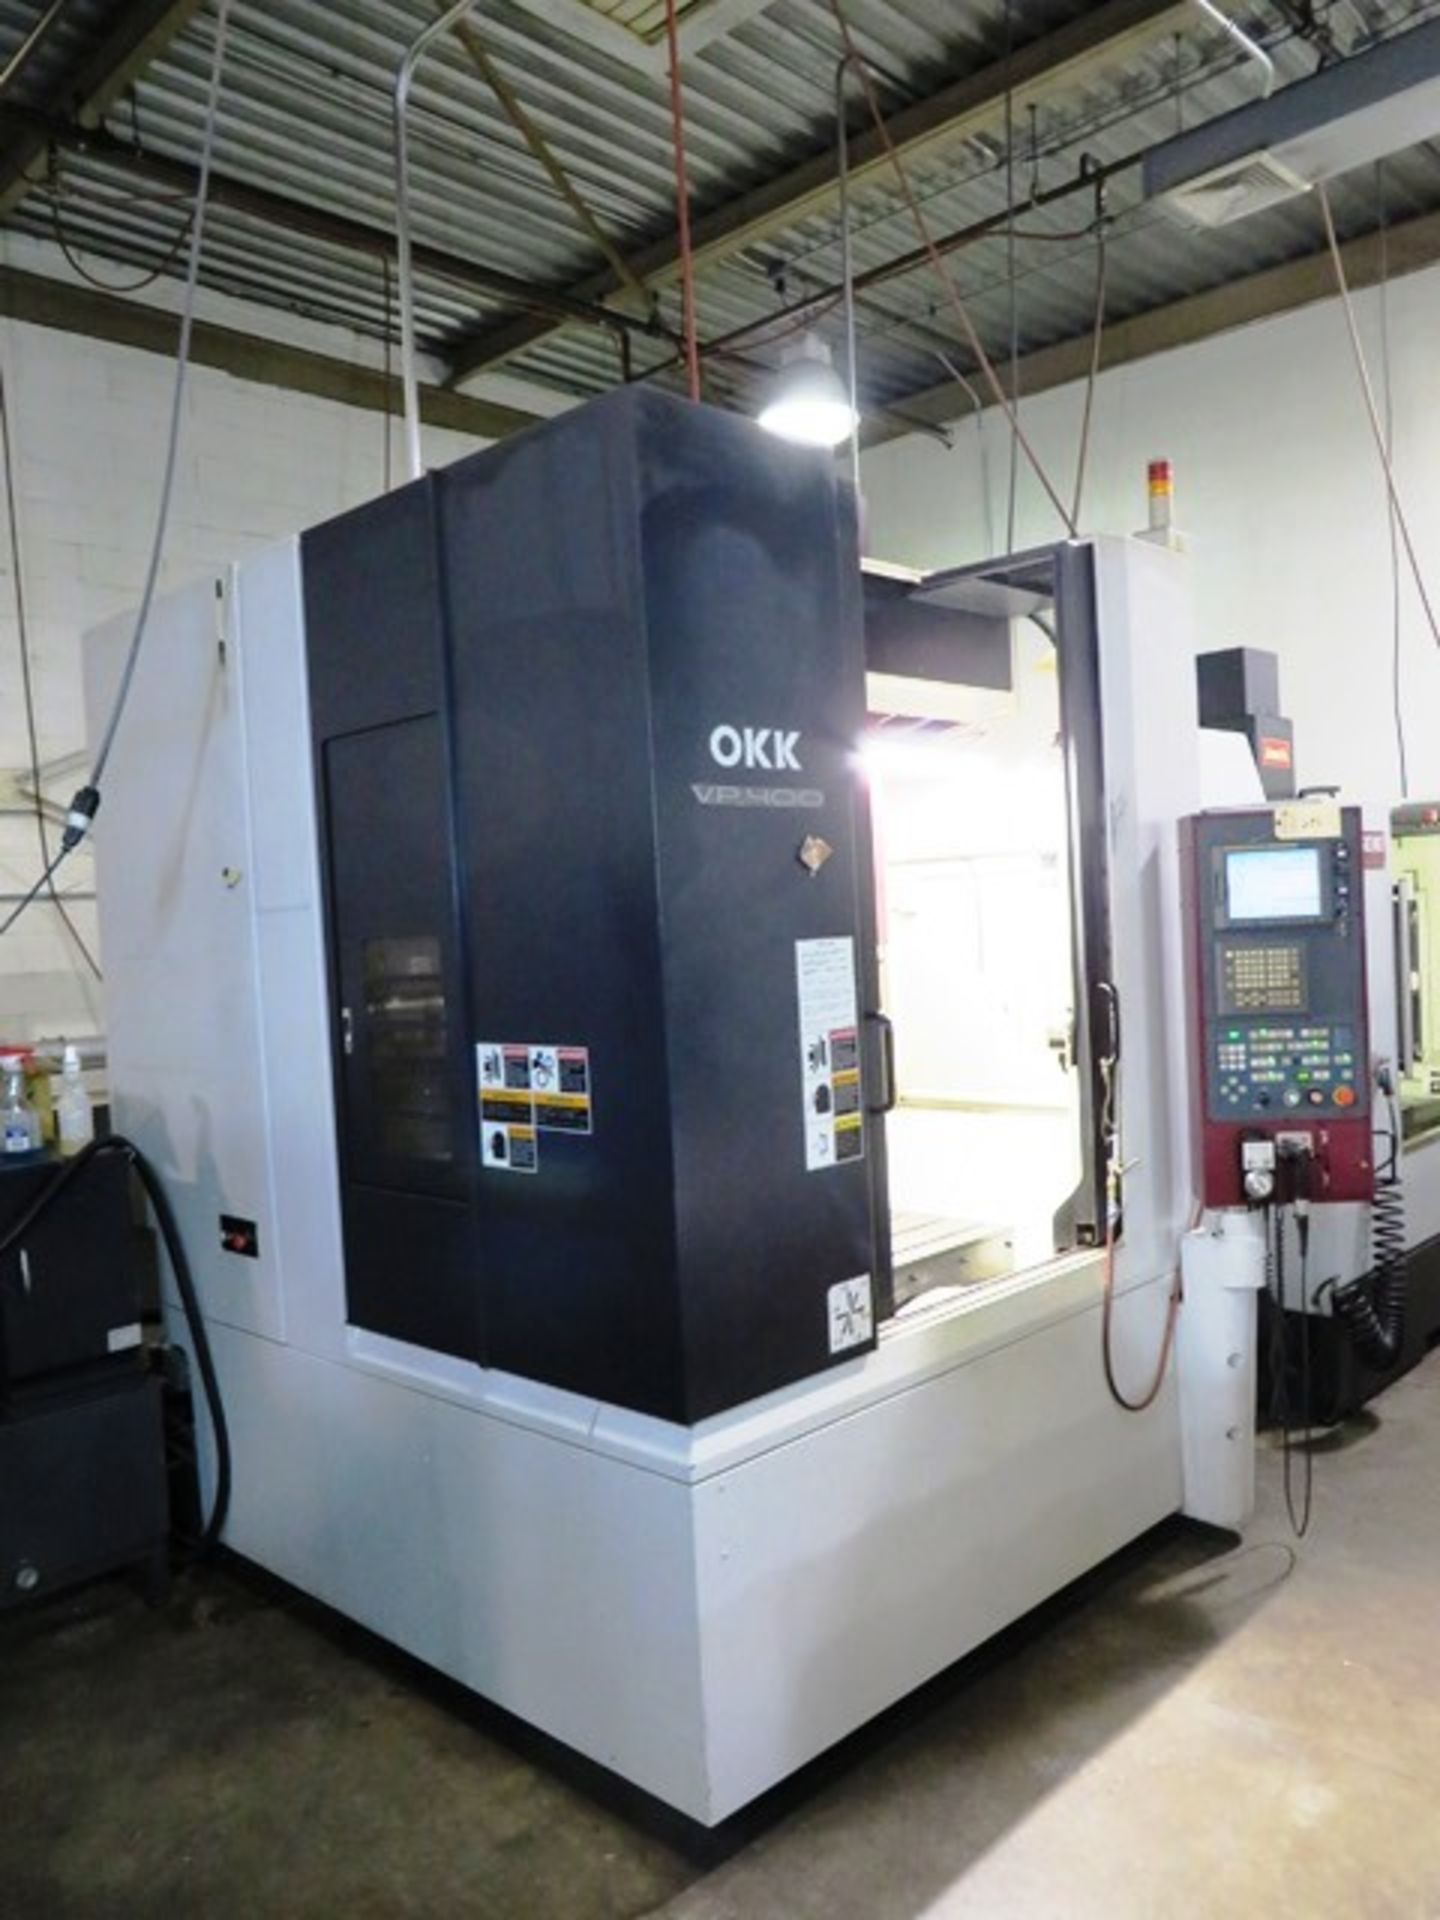 OKK VP400 Bridge Type CNC Vertical Machining Center - Image 3 of 6